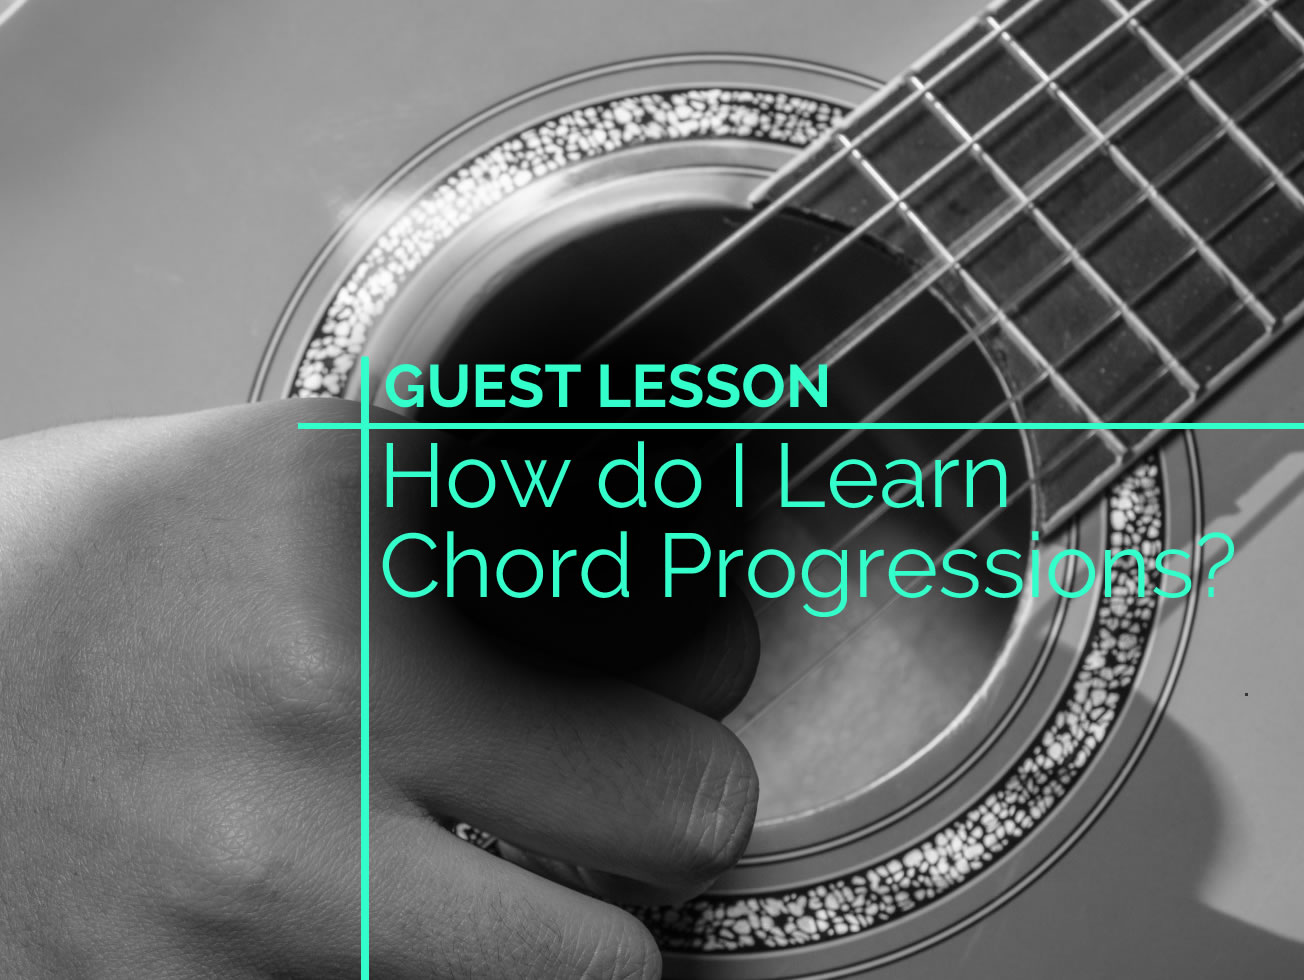 basic guitar chord progressions